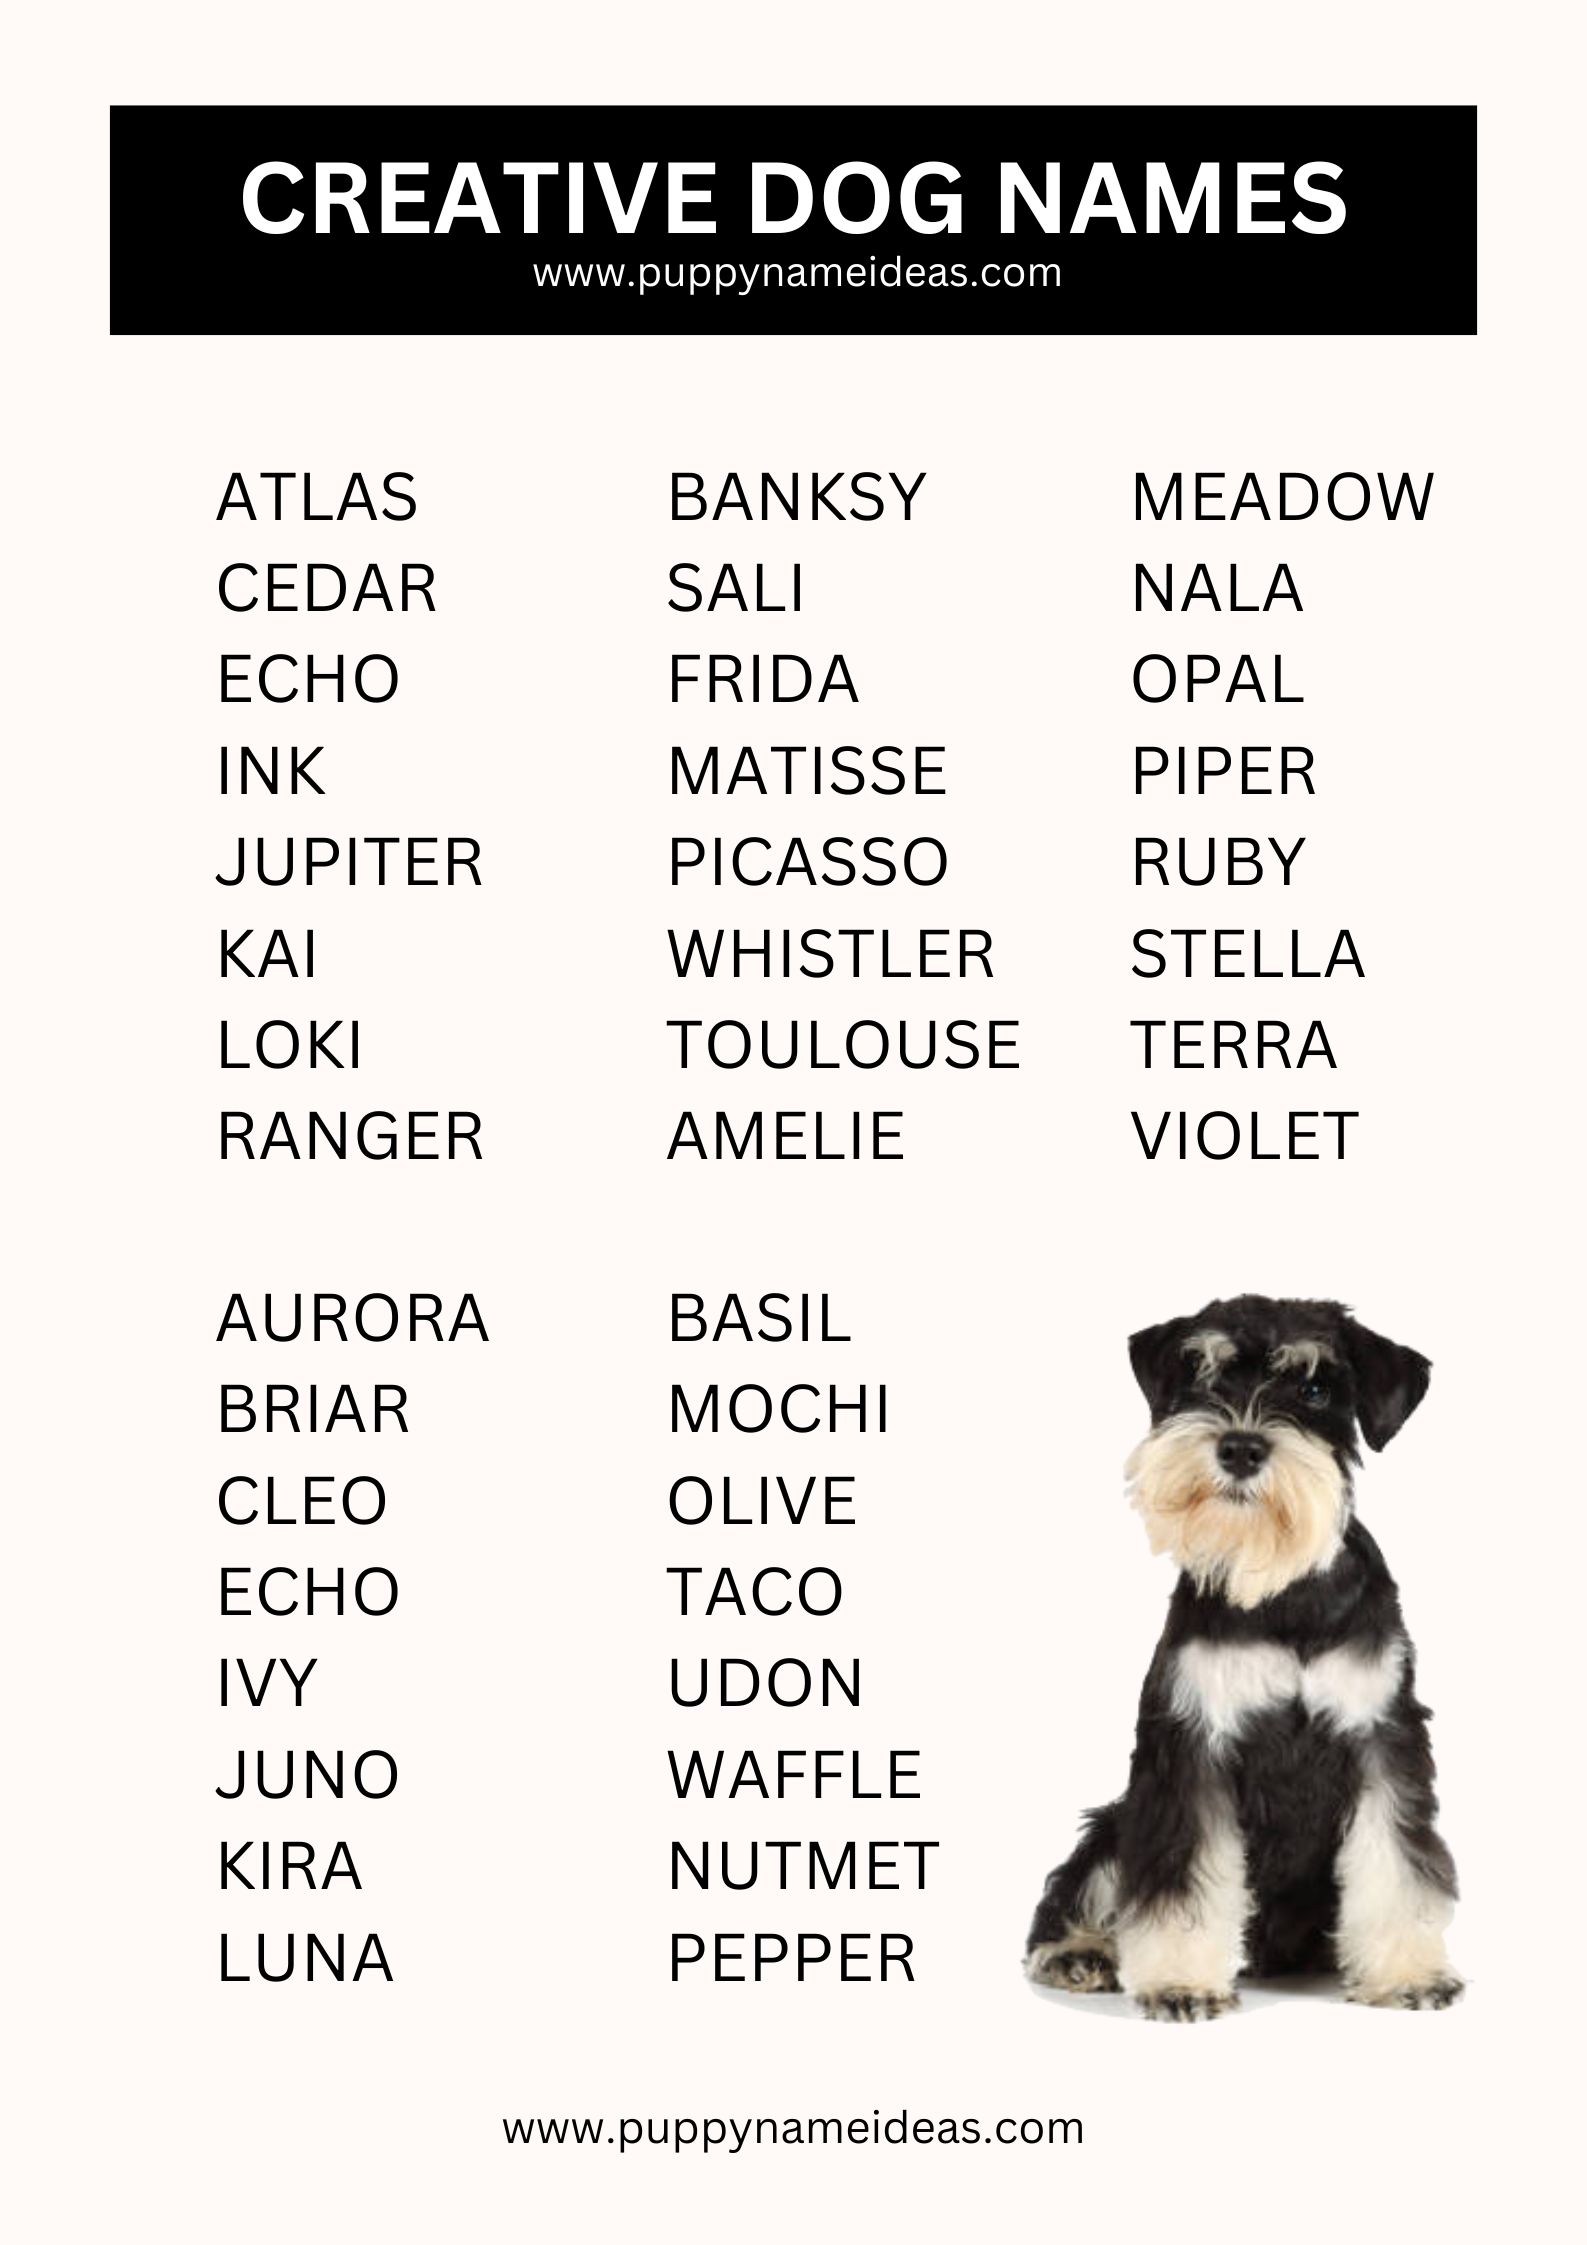 List Of Creative Dog Names